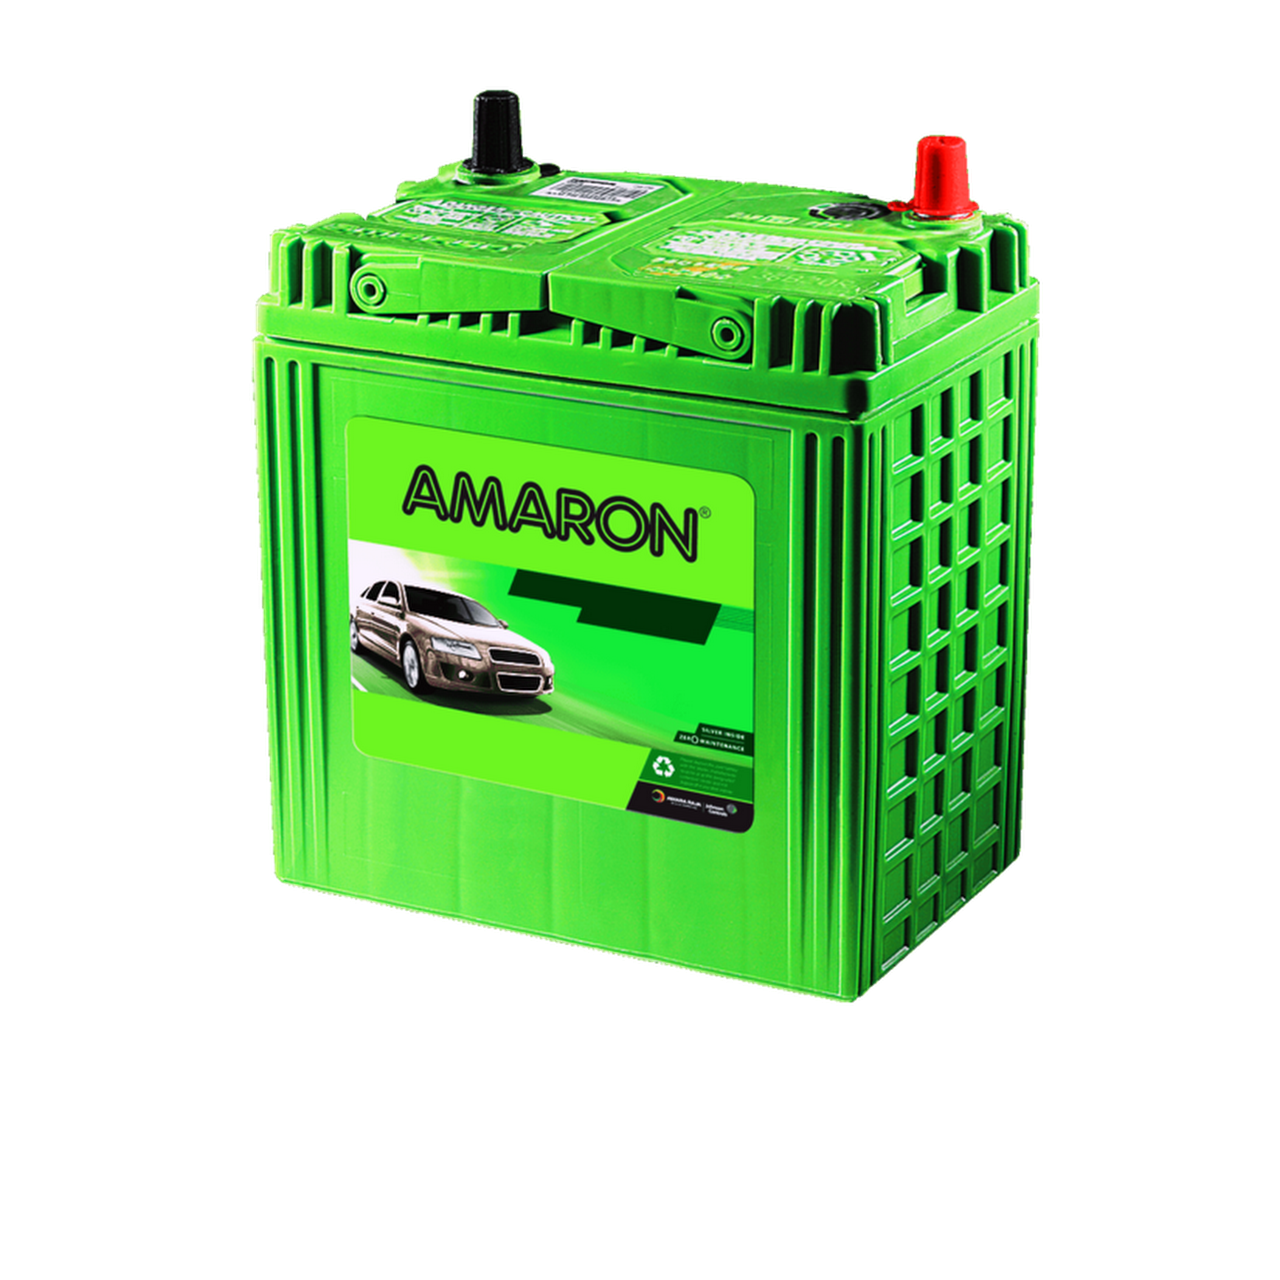 Proton Tiara Amaron Battery Product for quote